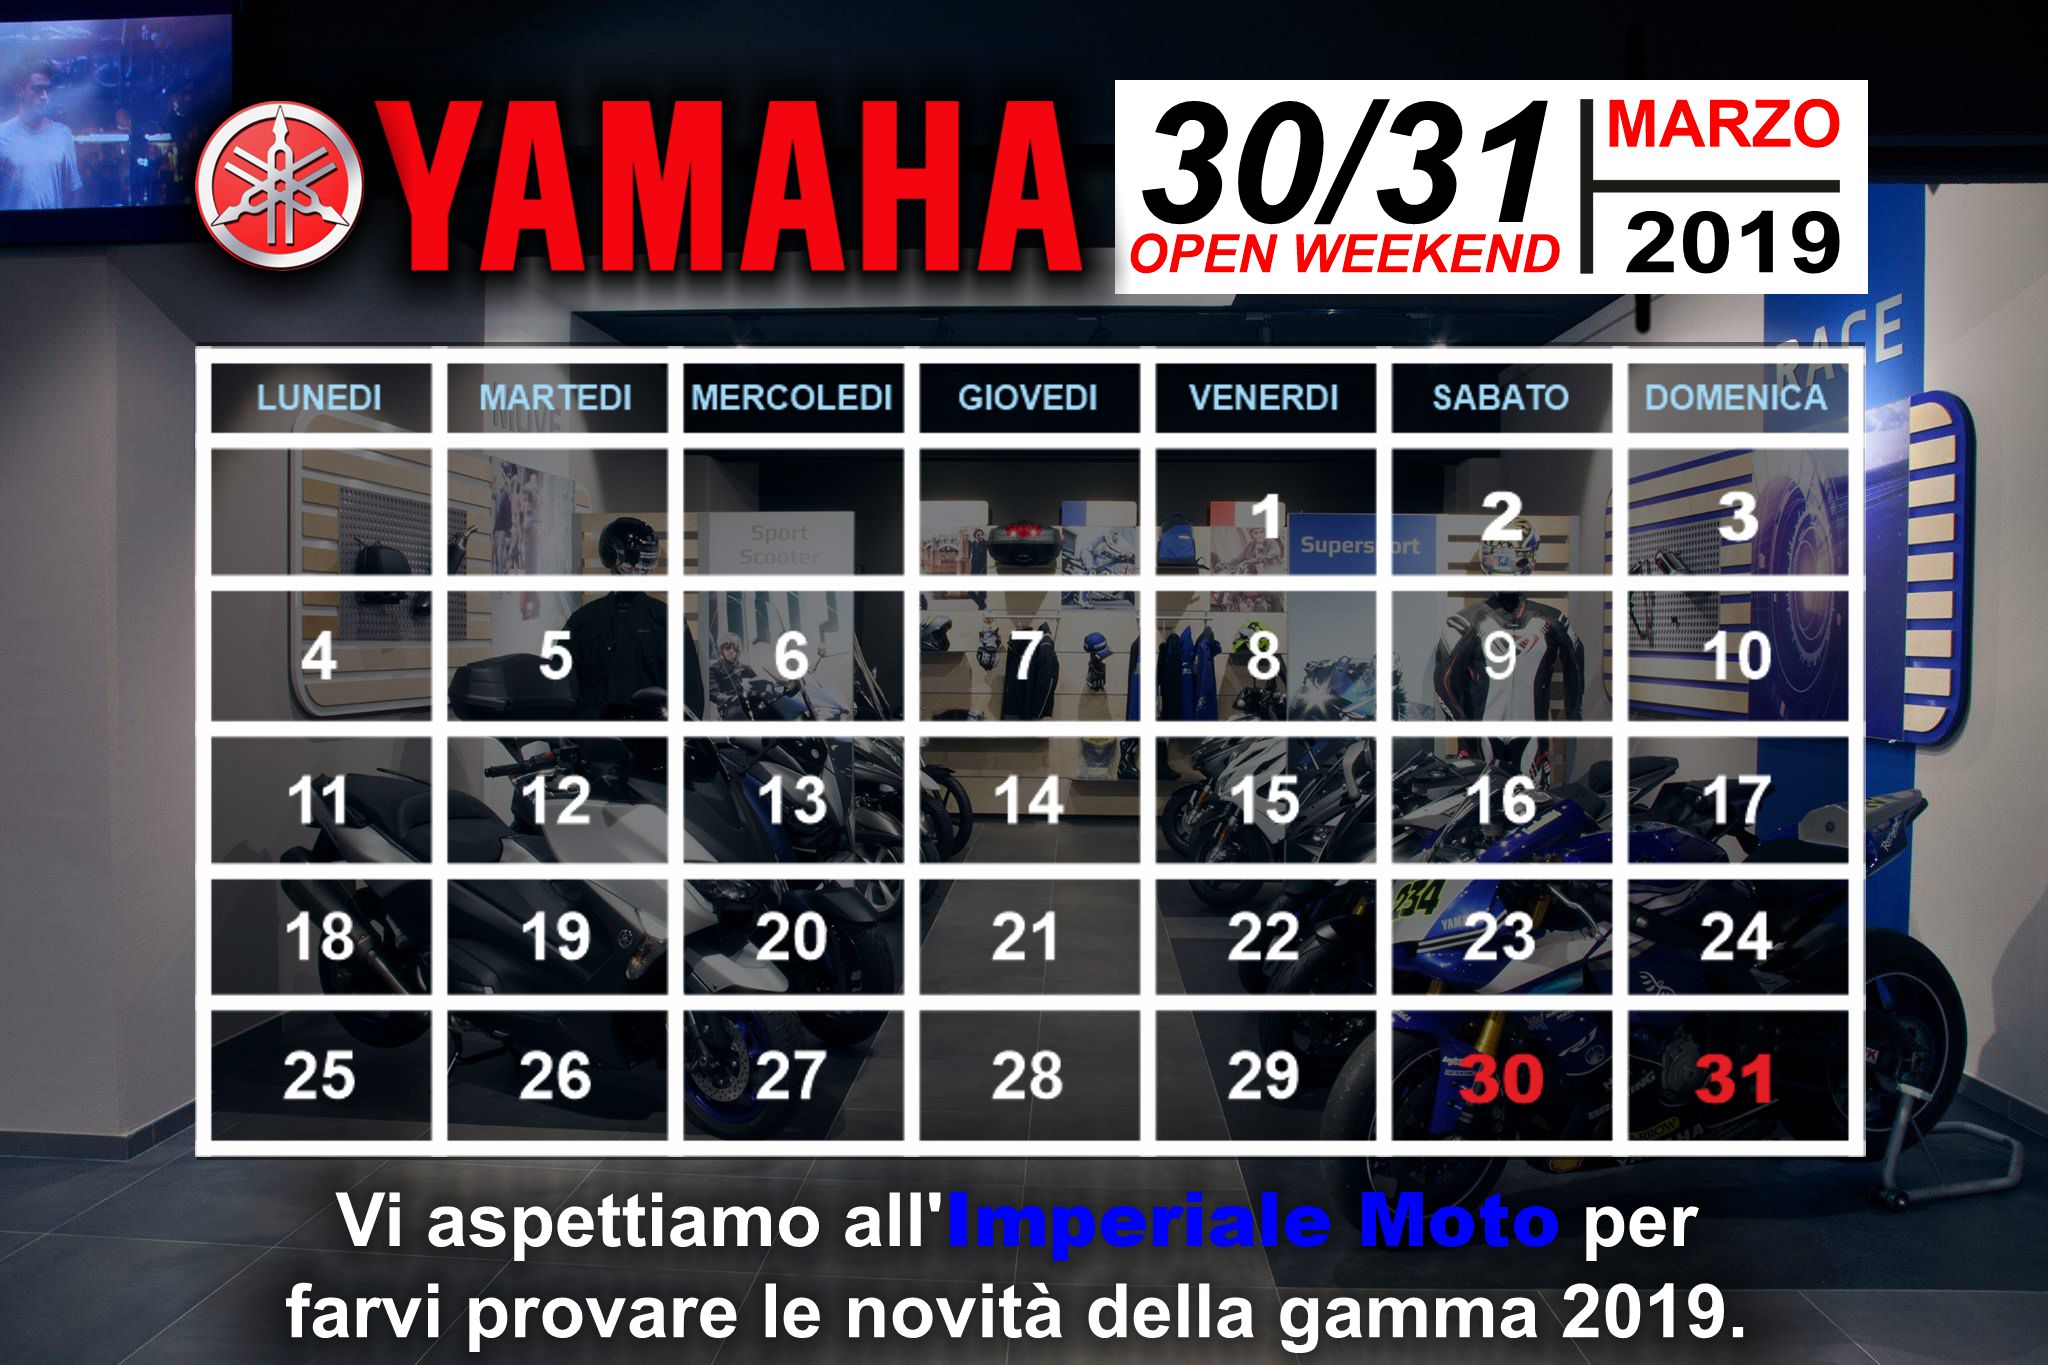 Vieni a trovarci nel Open Weekend Yamaha, Yamaha Empoli, Concessionario Yamaha, concessionario Yamaha a Empoli, Yamaha Toscana, Yamaha Firenze, Concessionario Yamaha Toscana, Concessionario Yamaha Firenze